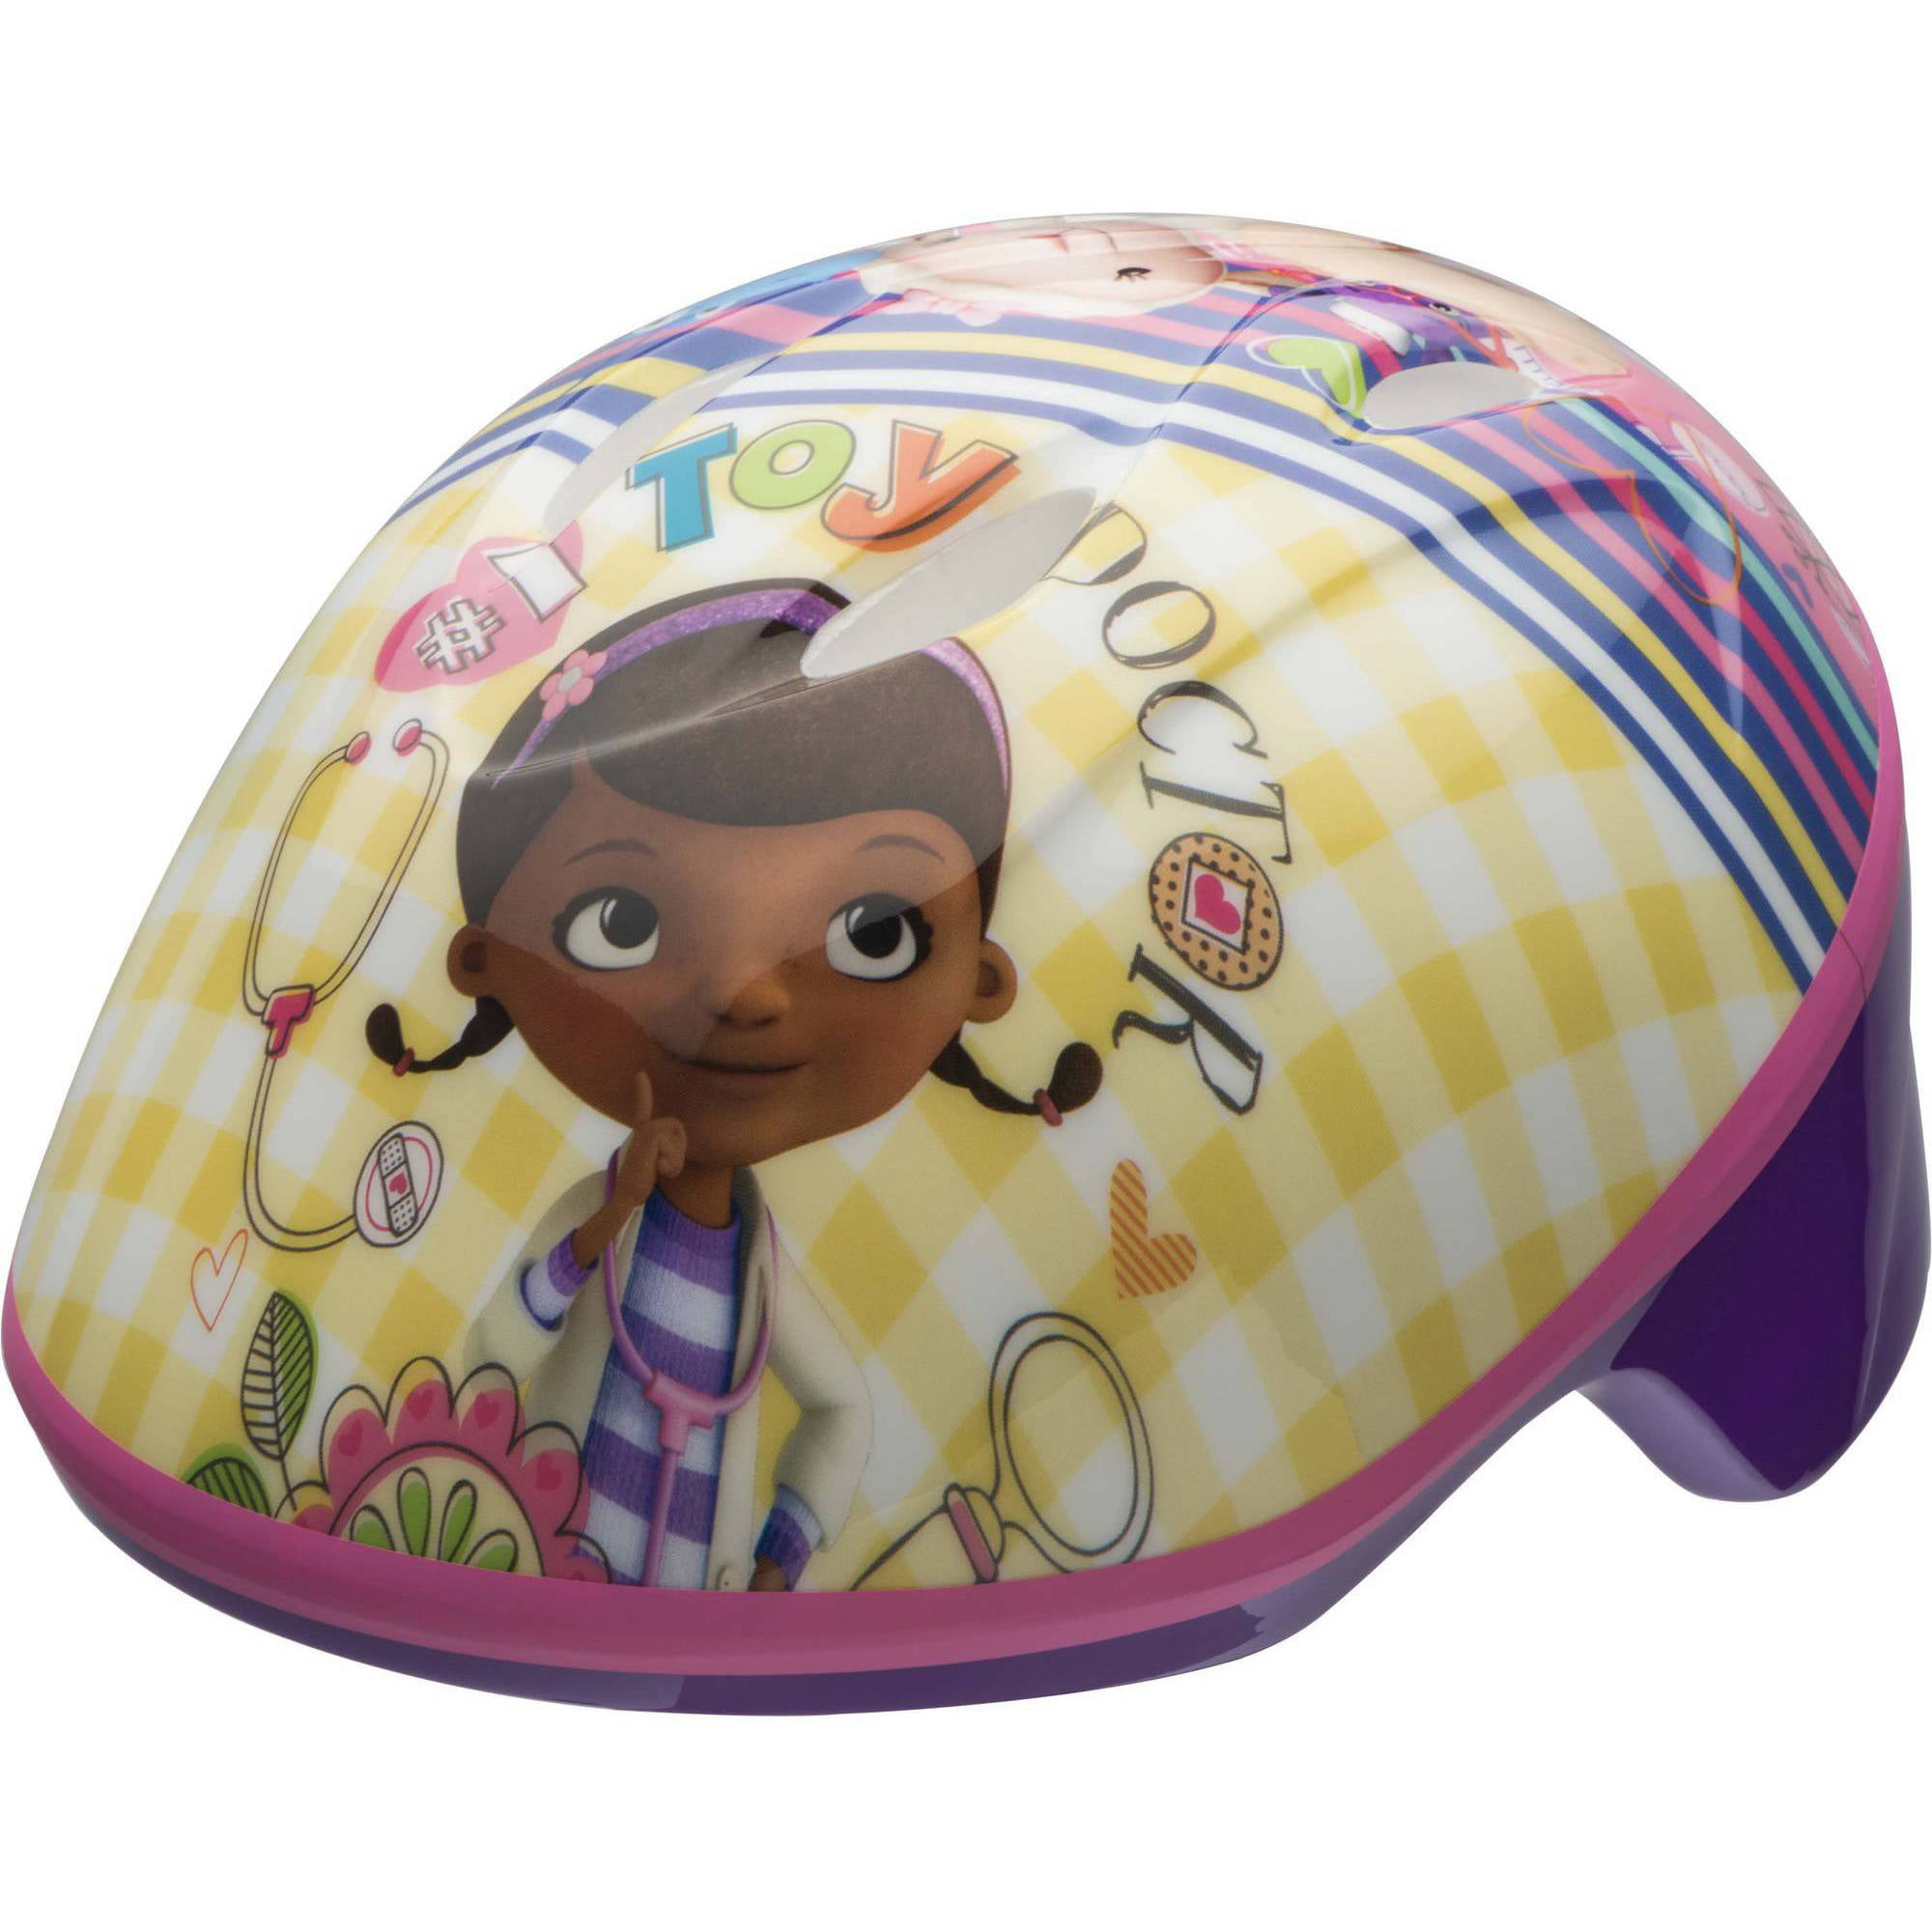 48-52cm Kids New Details about   Bell Disney Minnie Mouse Polka Dots Bike Helmet Toddler 3 